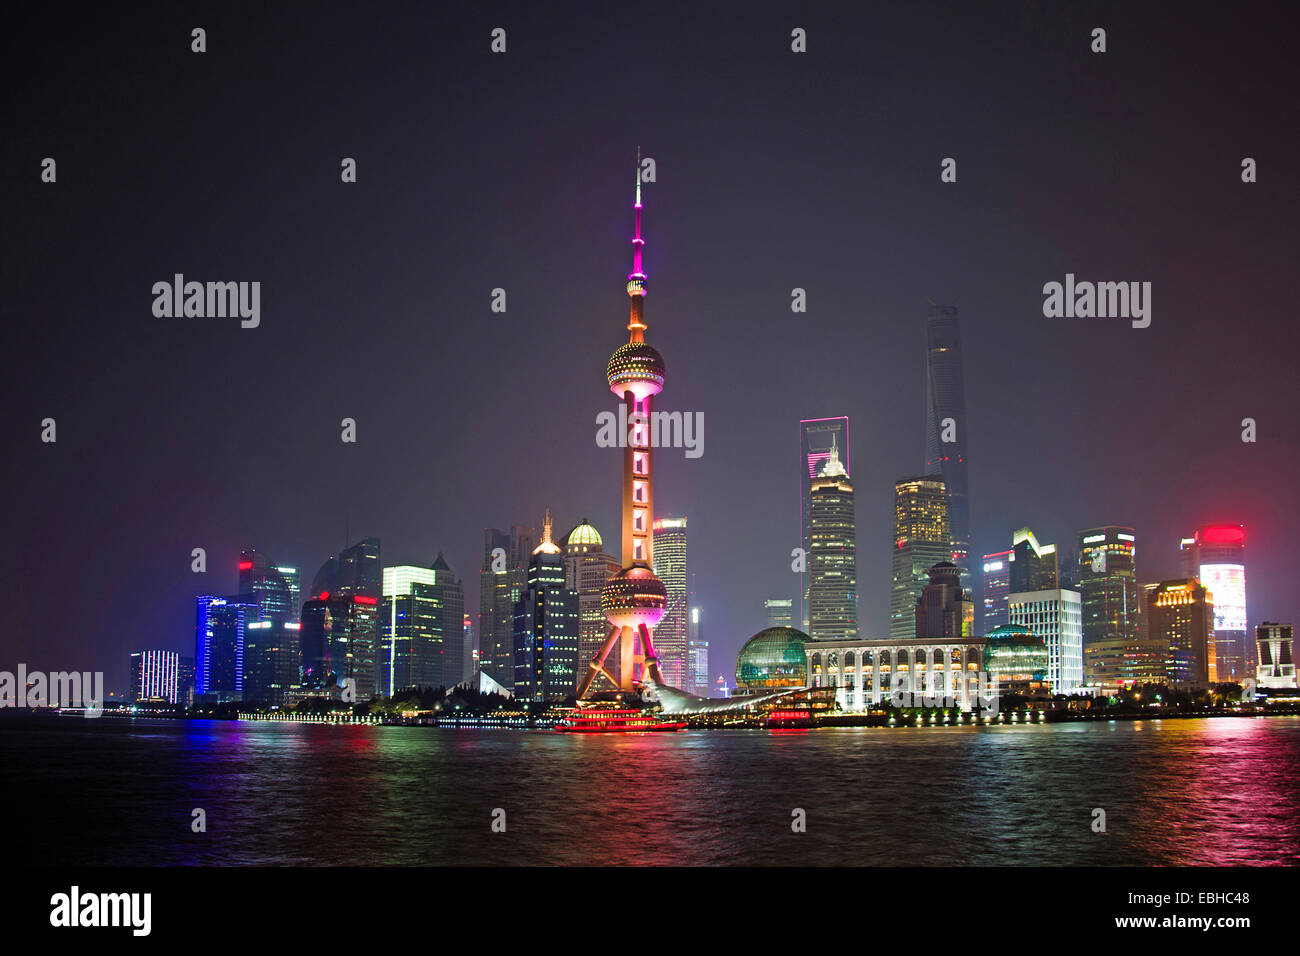 skyline of Pudong with illuminated television tower at night, China, Shanghai Stock Photo